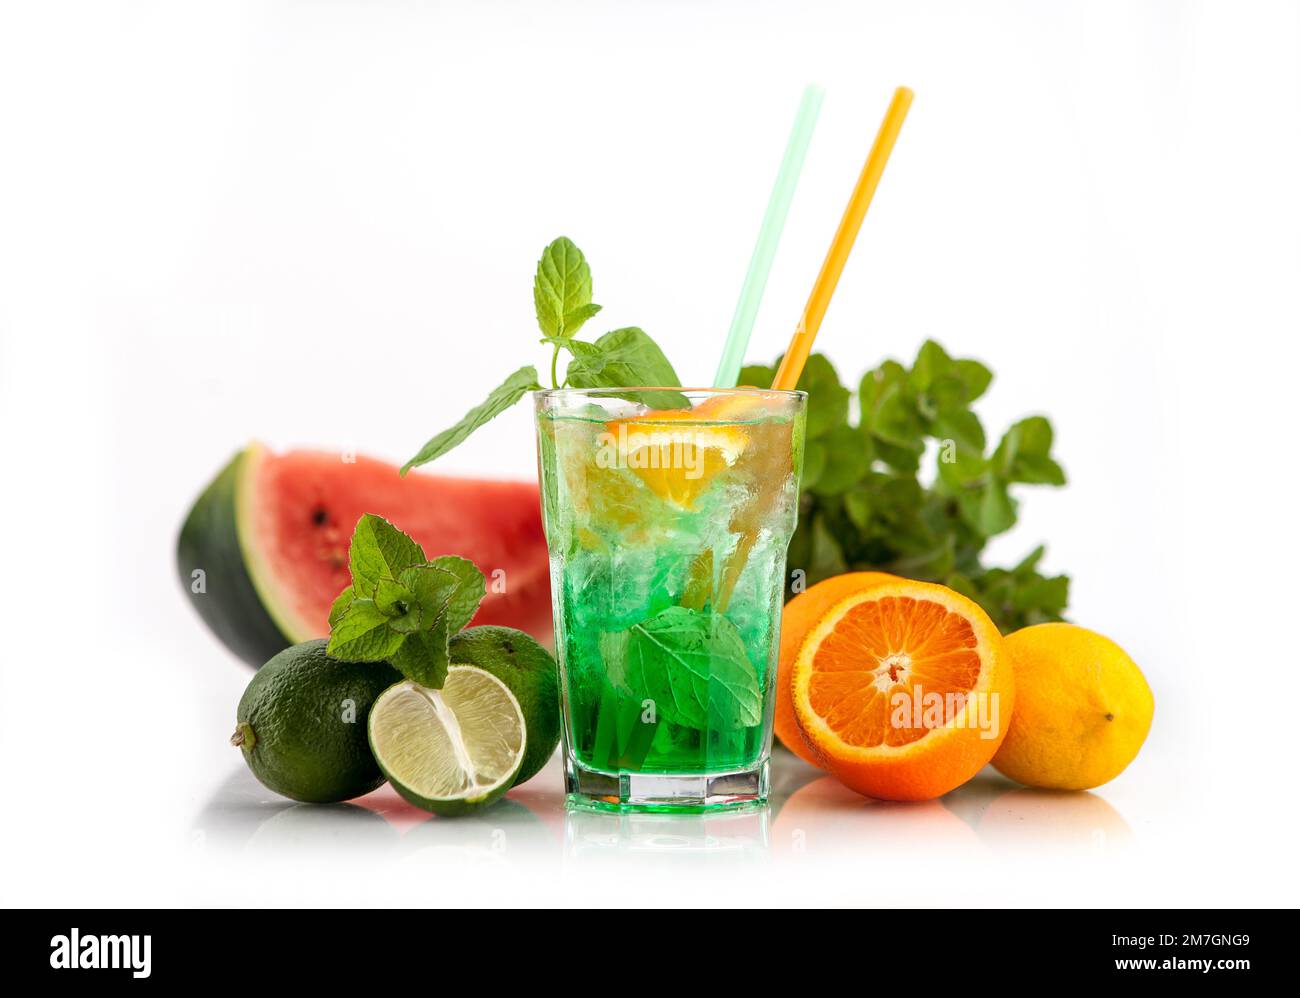 summer refreshing drinks on a white background with fresh fruit - lemonade, orangeade Stock Photo